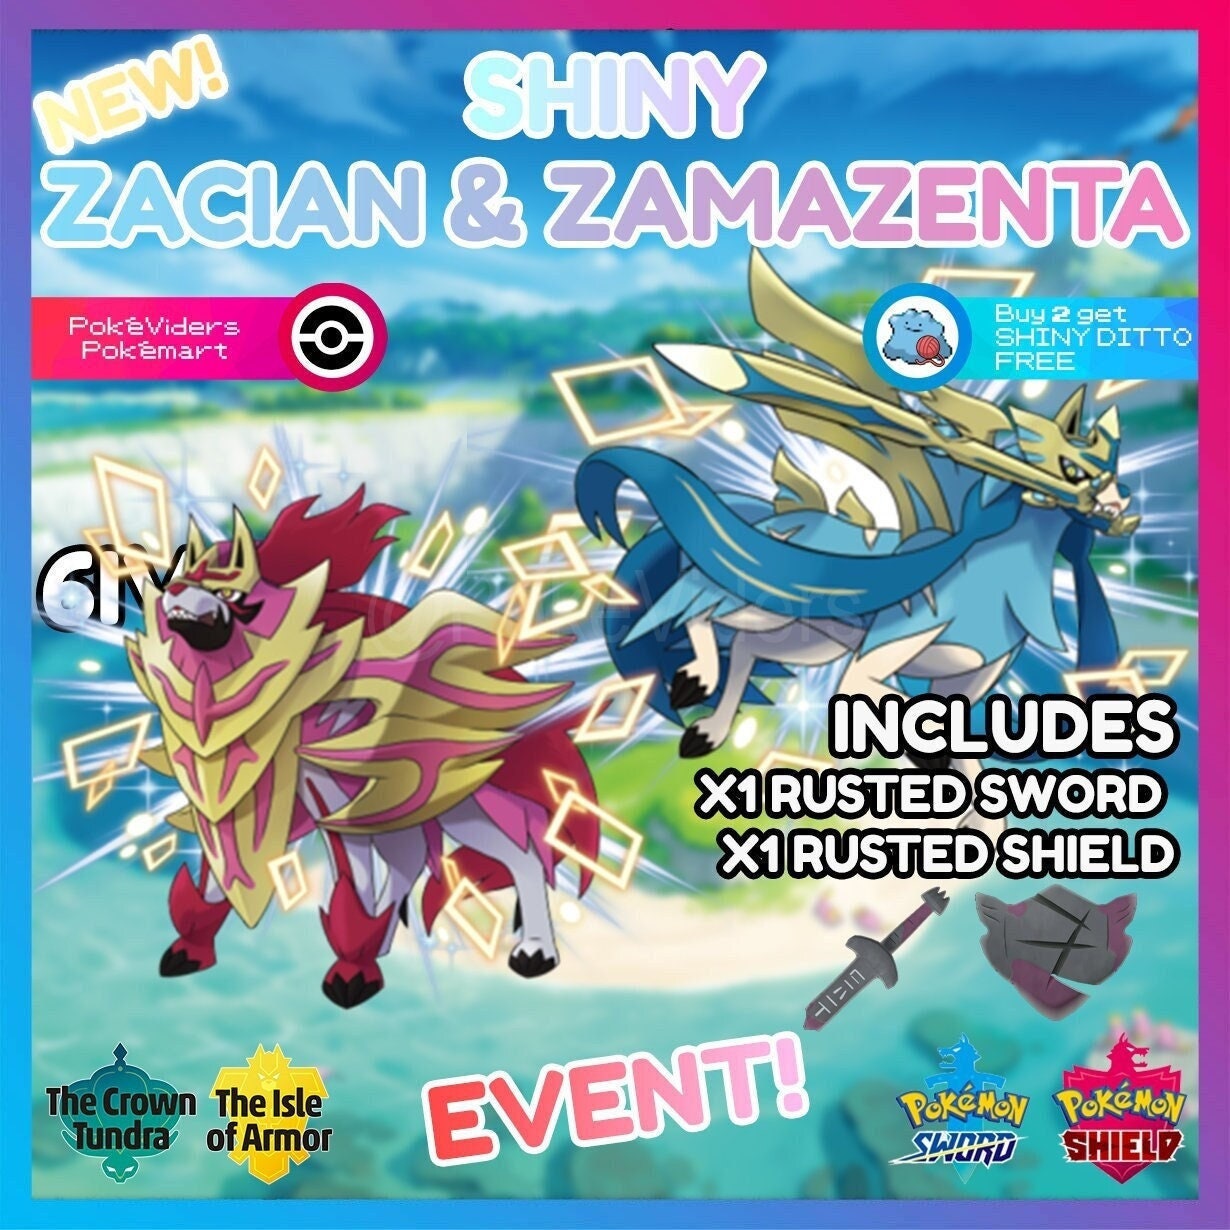 Get Shiny Zacian and Shiny Zamazenta at GameStop